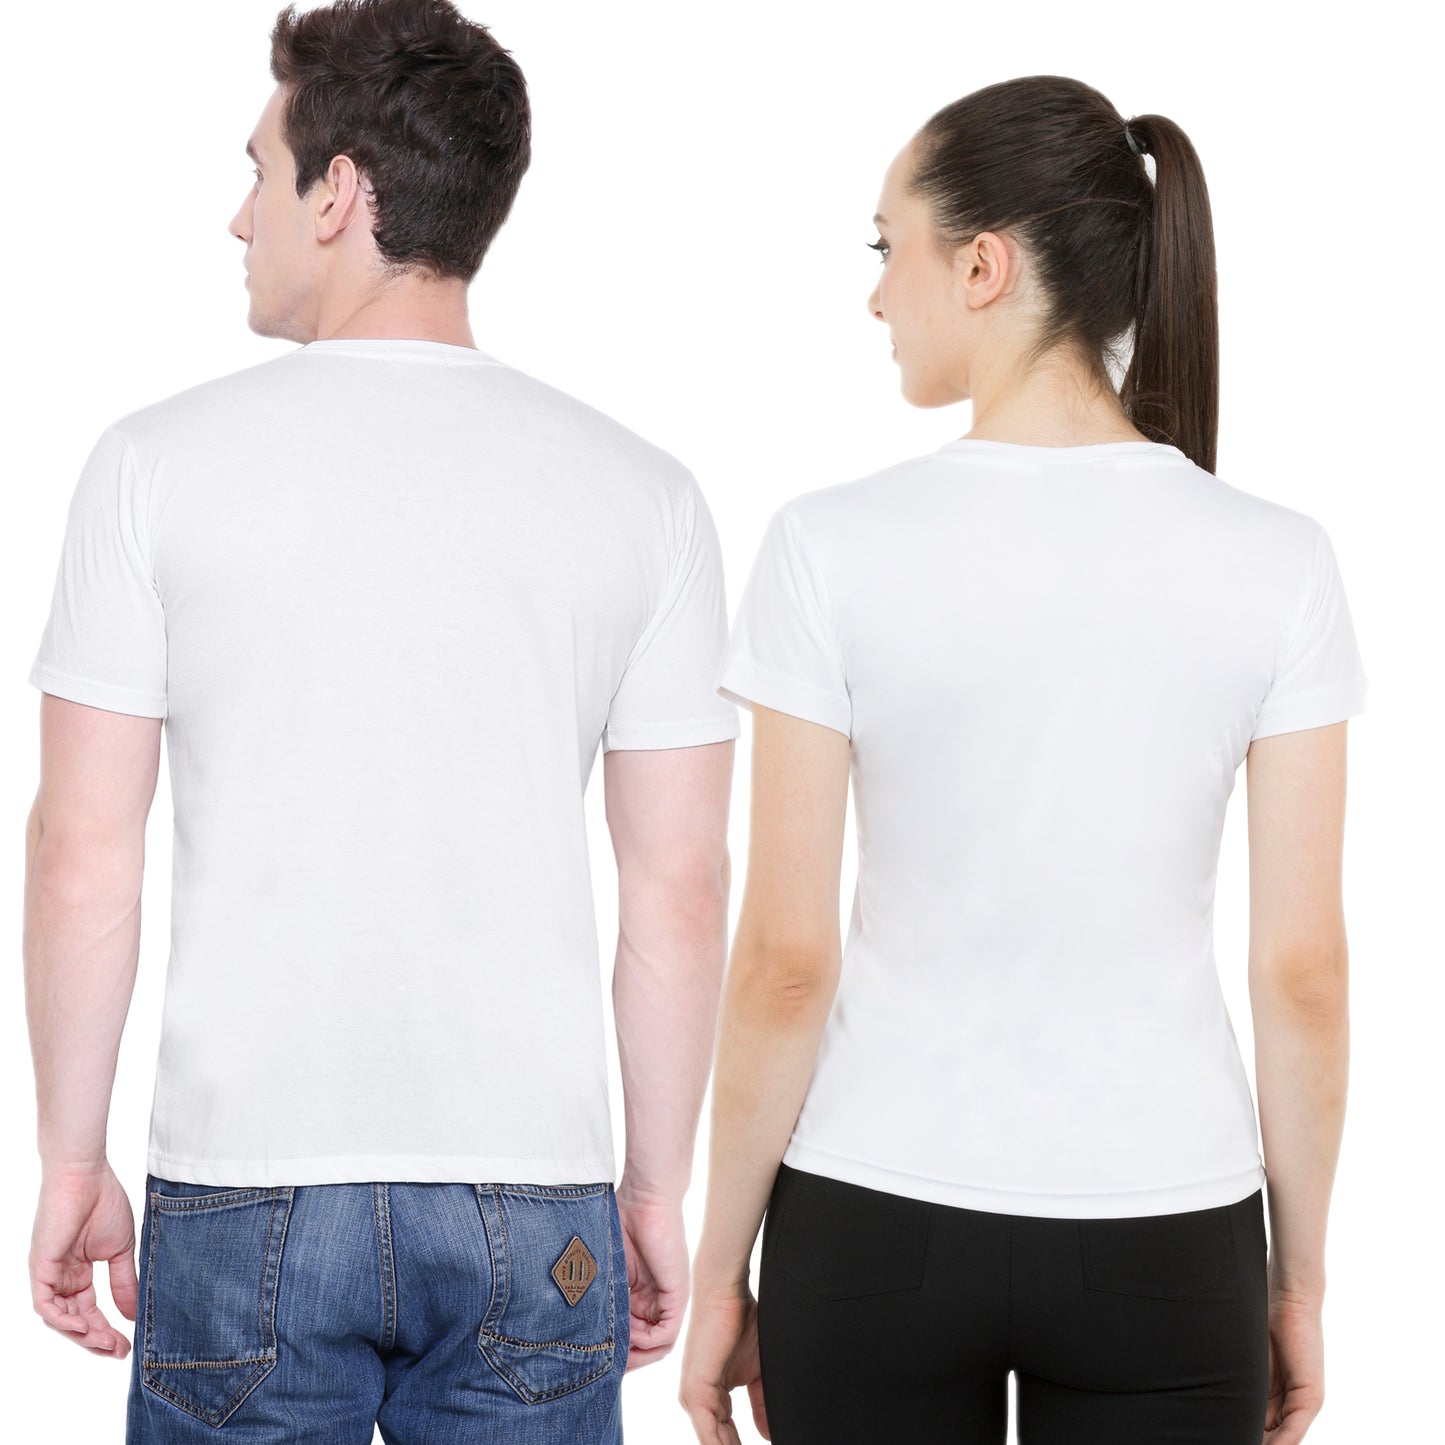 Rock and Peace matching Couple T shirts- White